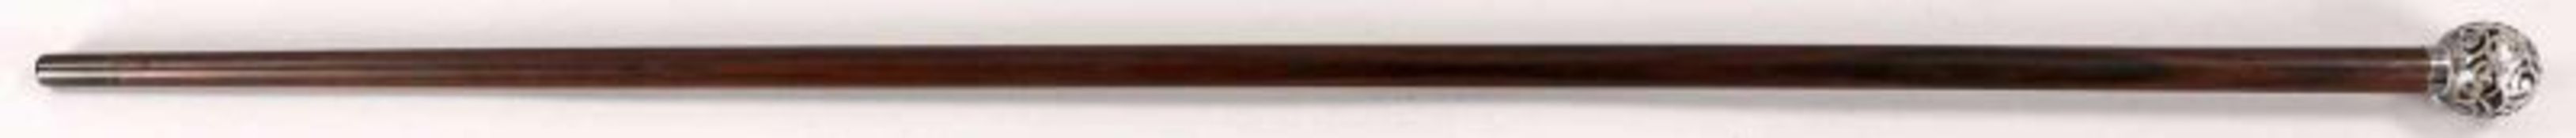 Spazierstock Ebenholz/Glas/Silber, U.S.A., um 1900 Konisch ansteigender Stock. Kugelförmiger knauf